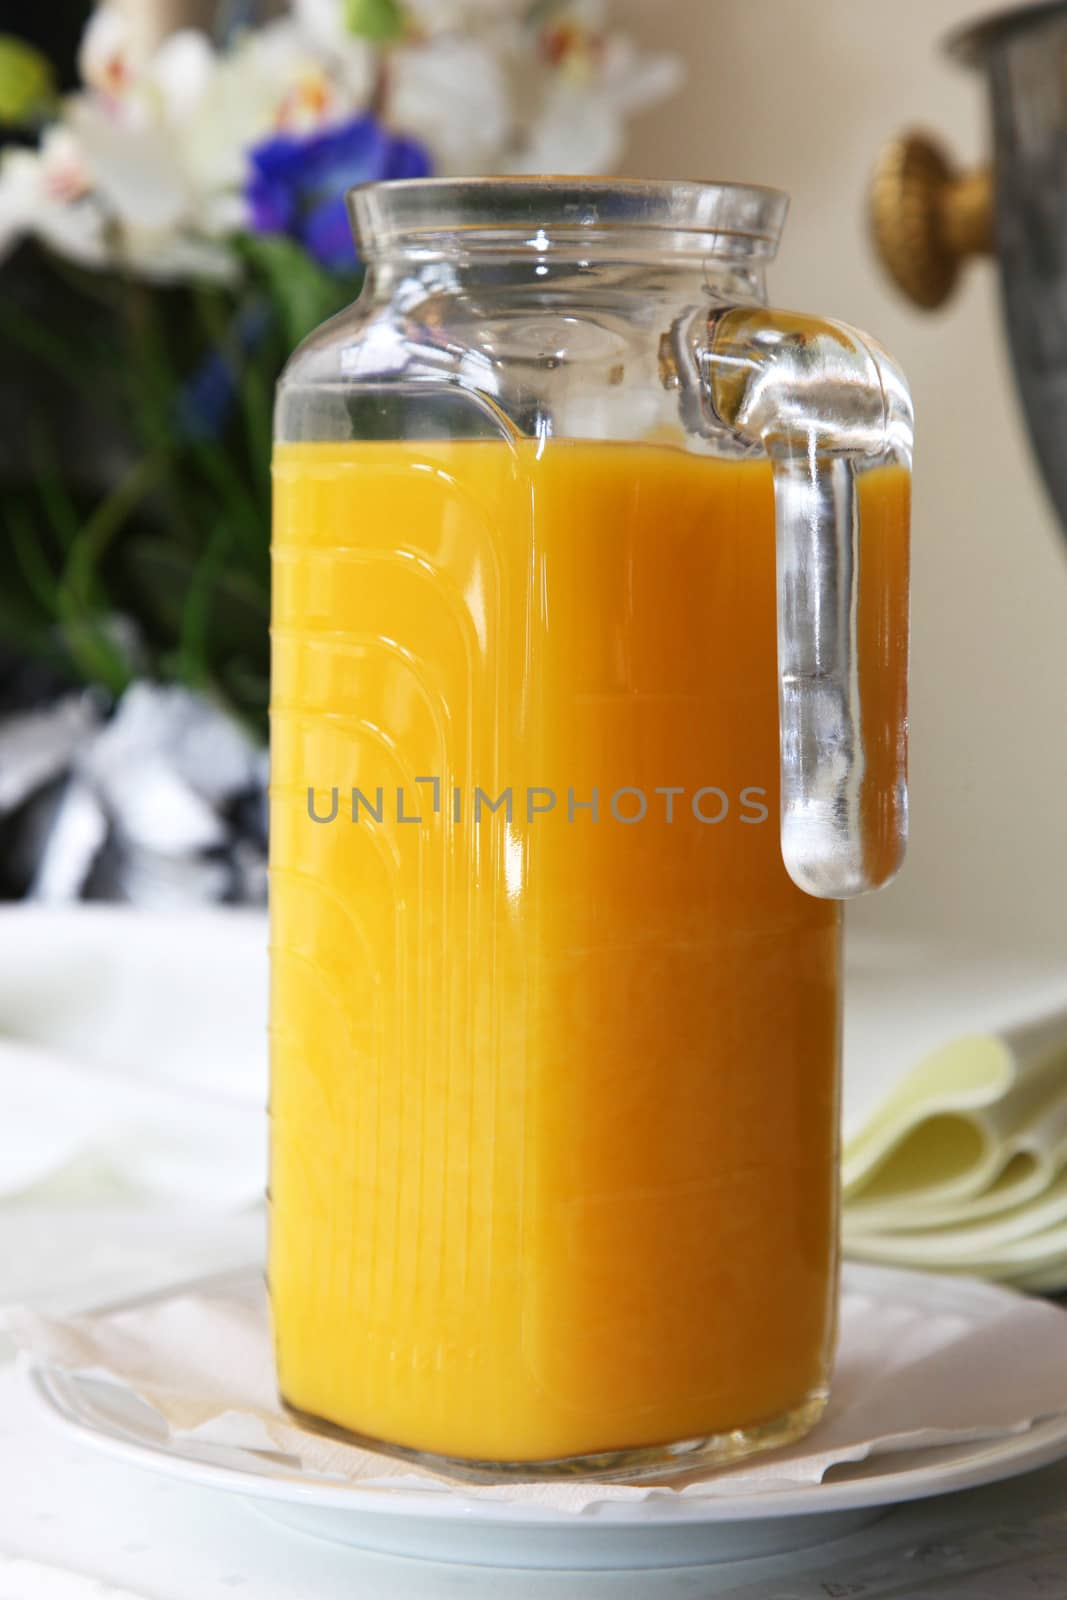 Jug of orange juice by Farina6000